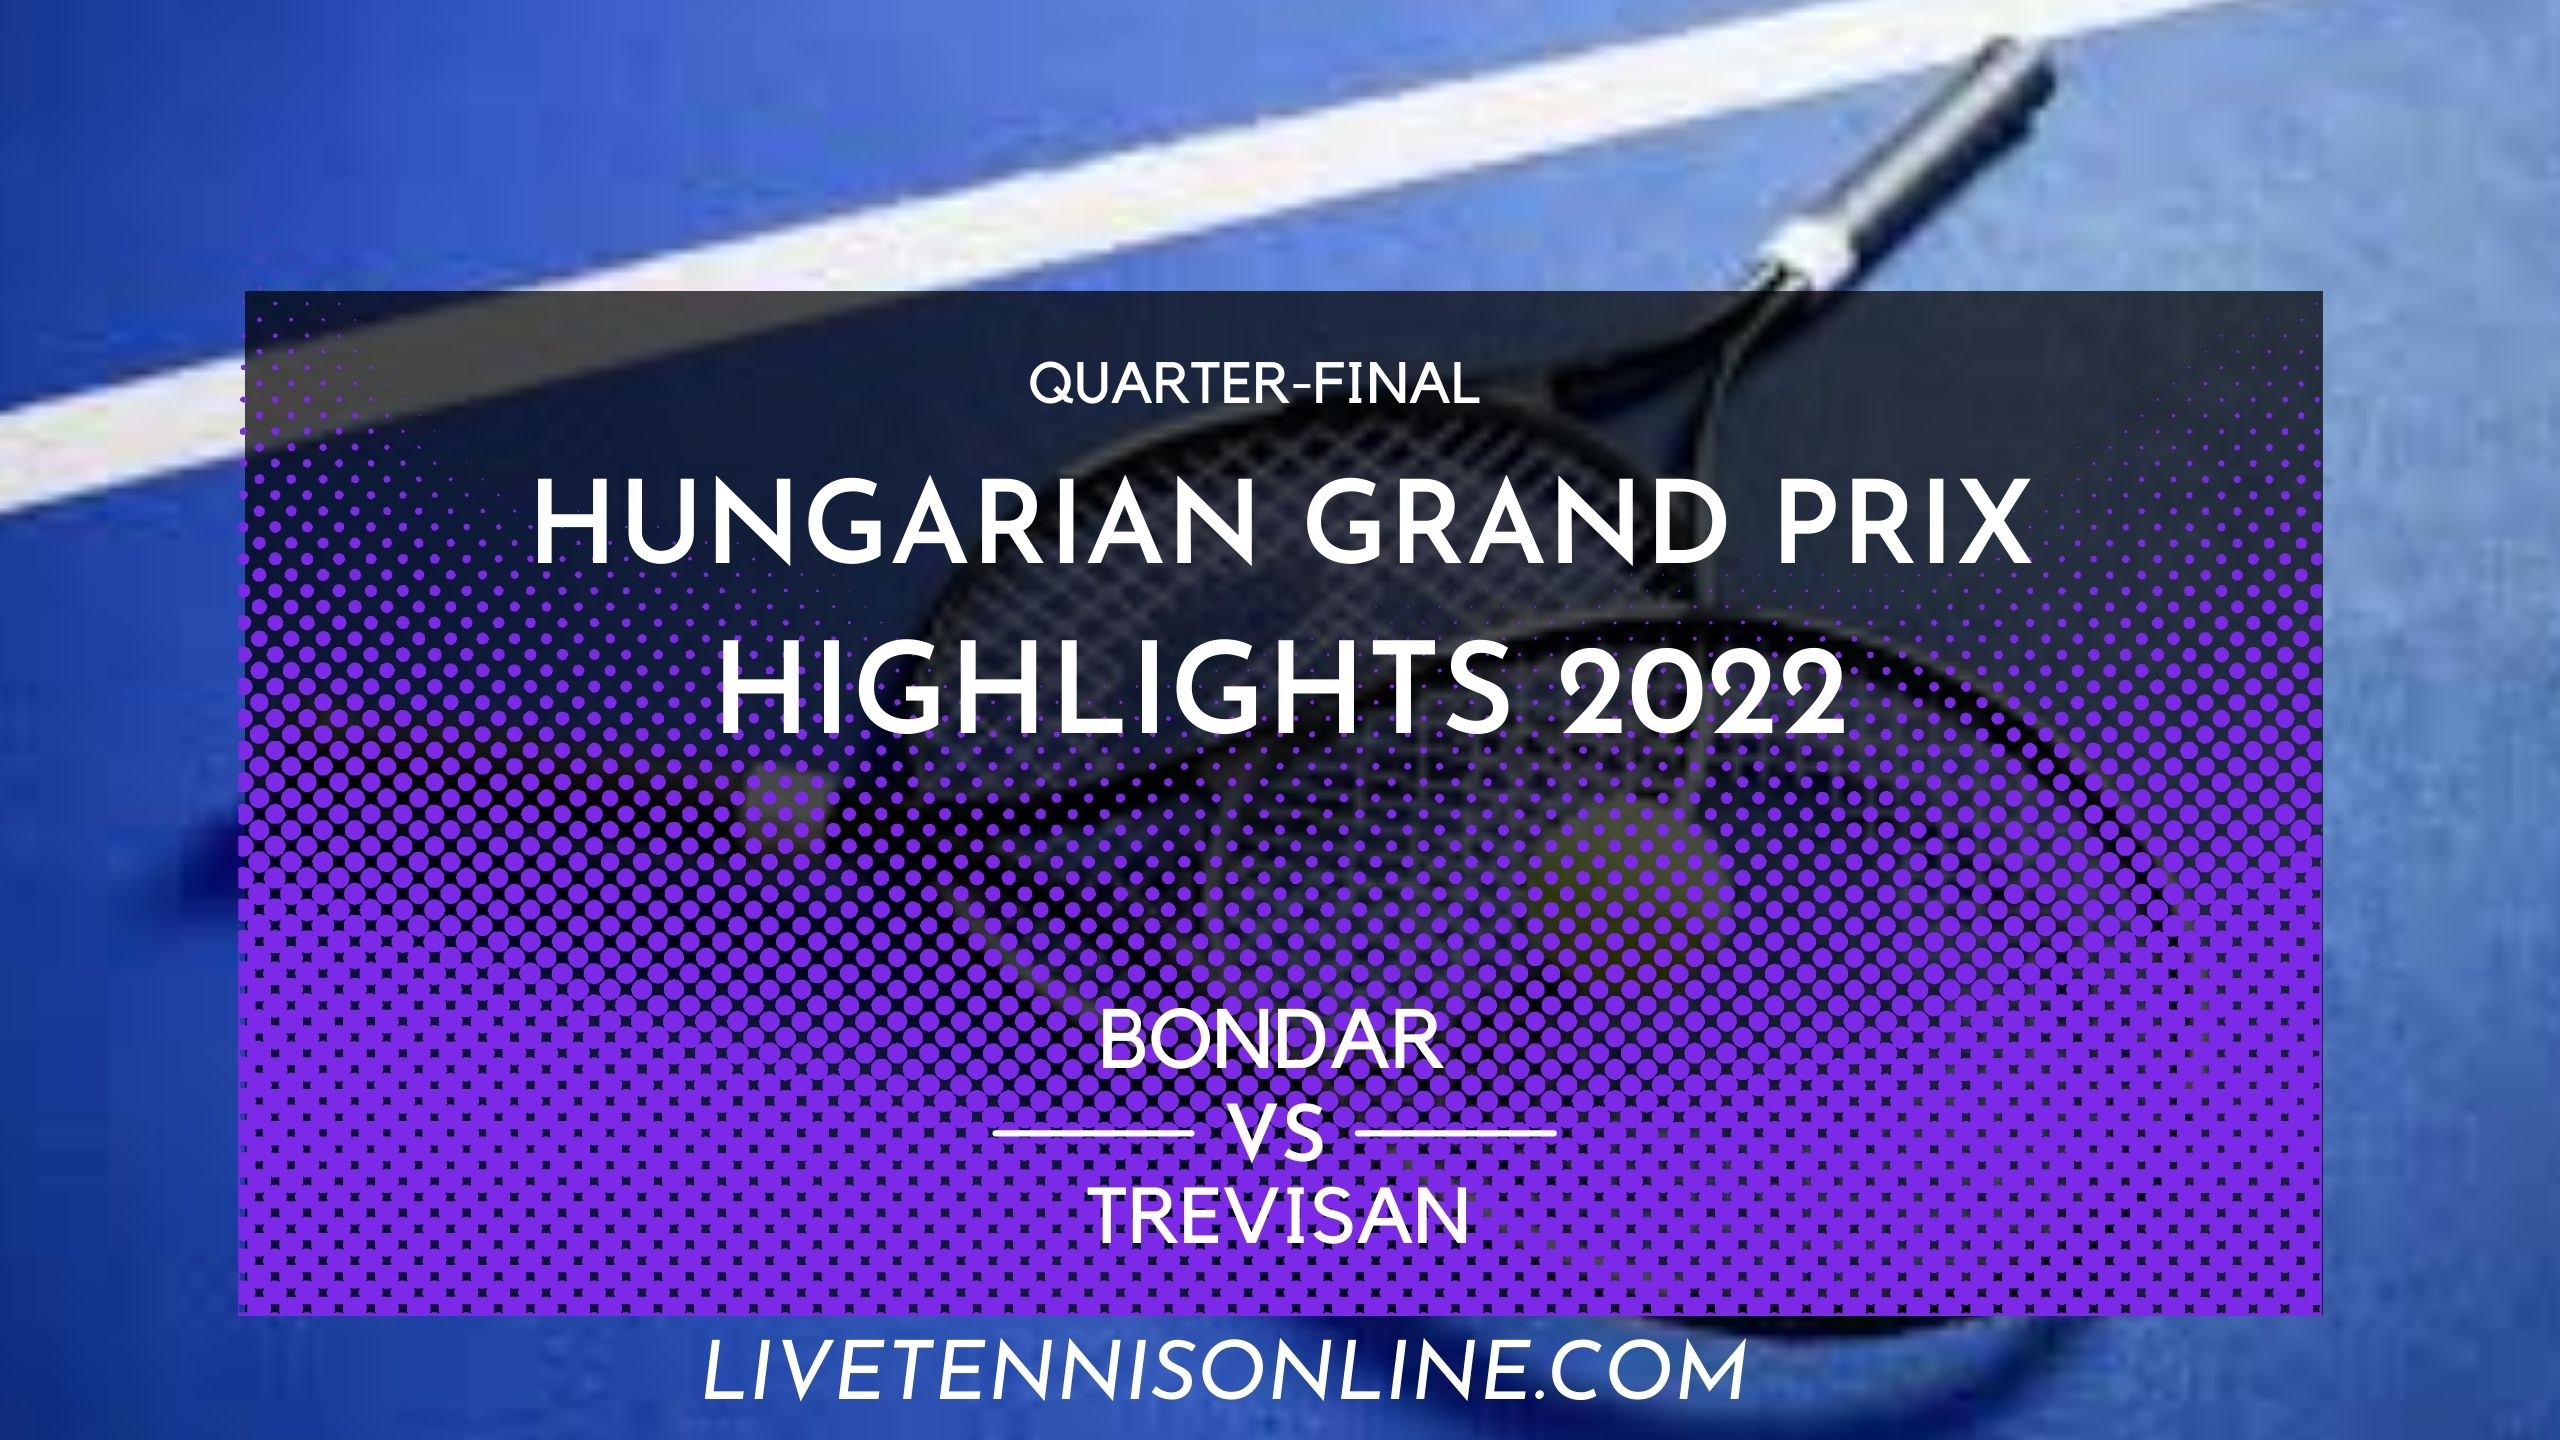 Bondar Vs Trevisan Q-F Highlights 2022 Hungarian Grand Prix